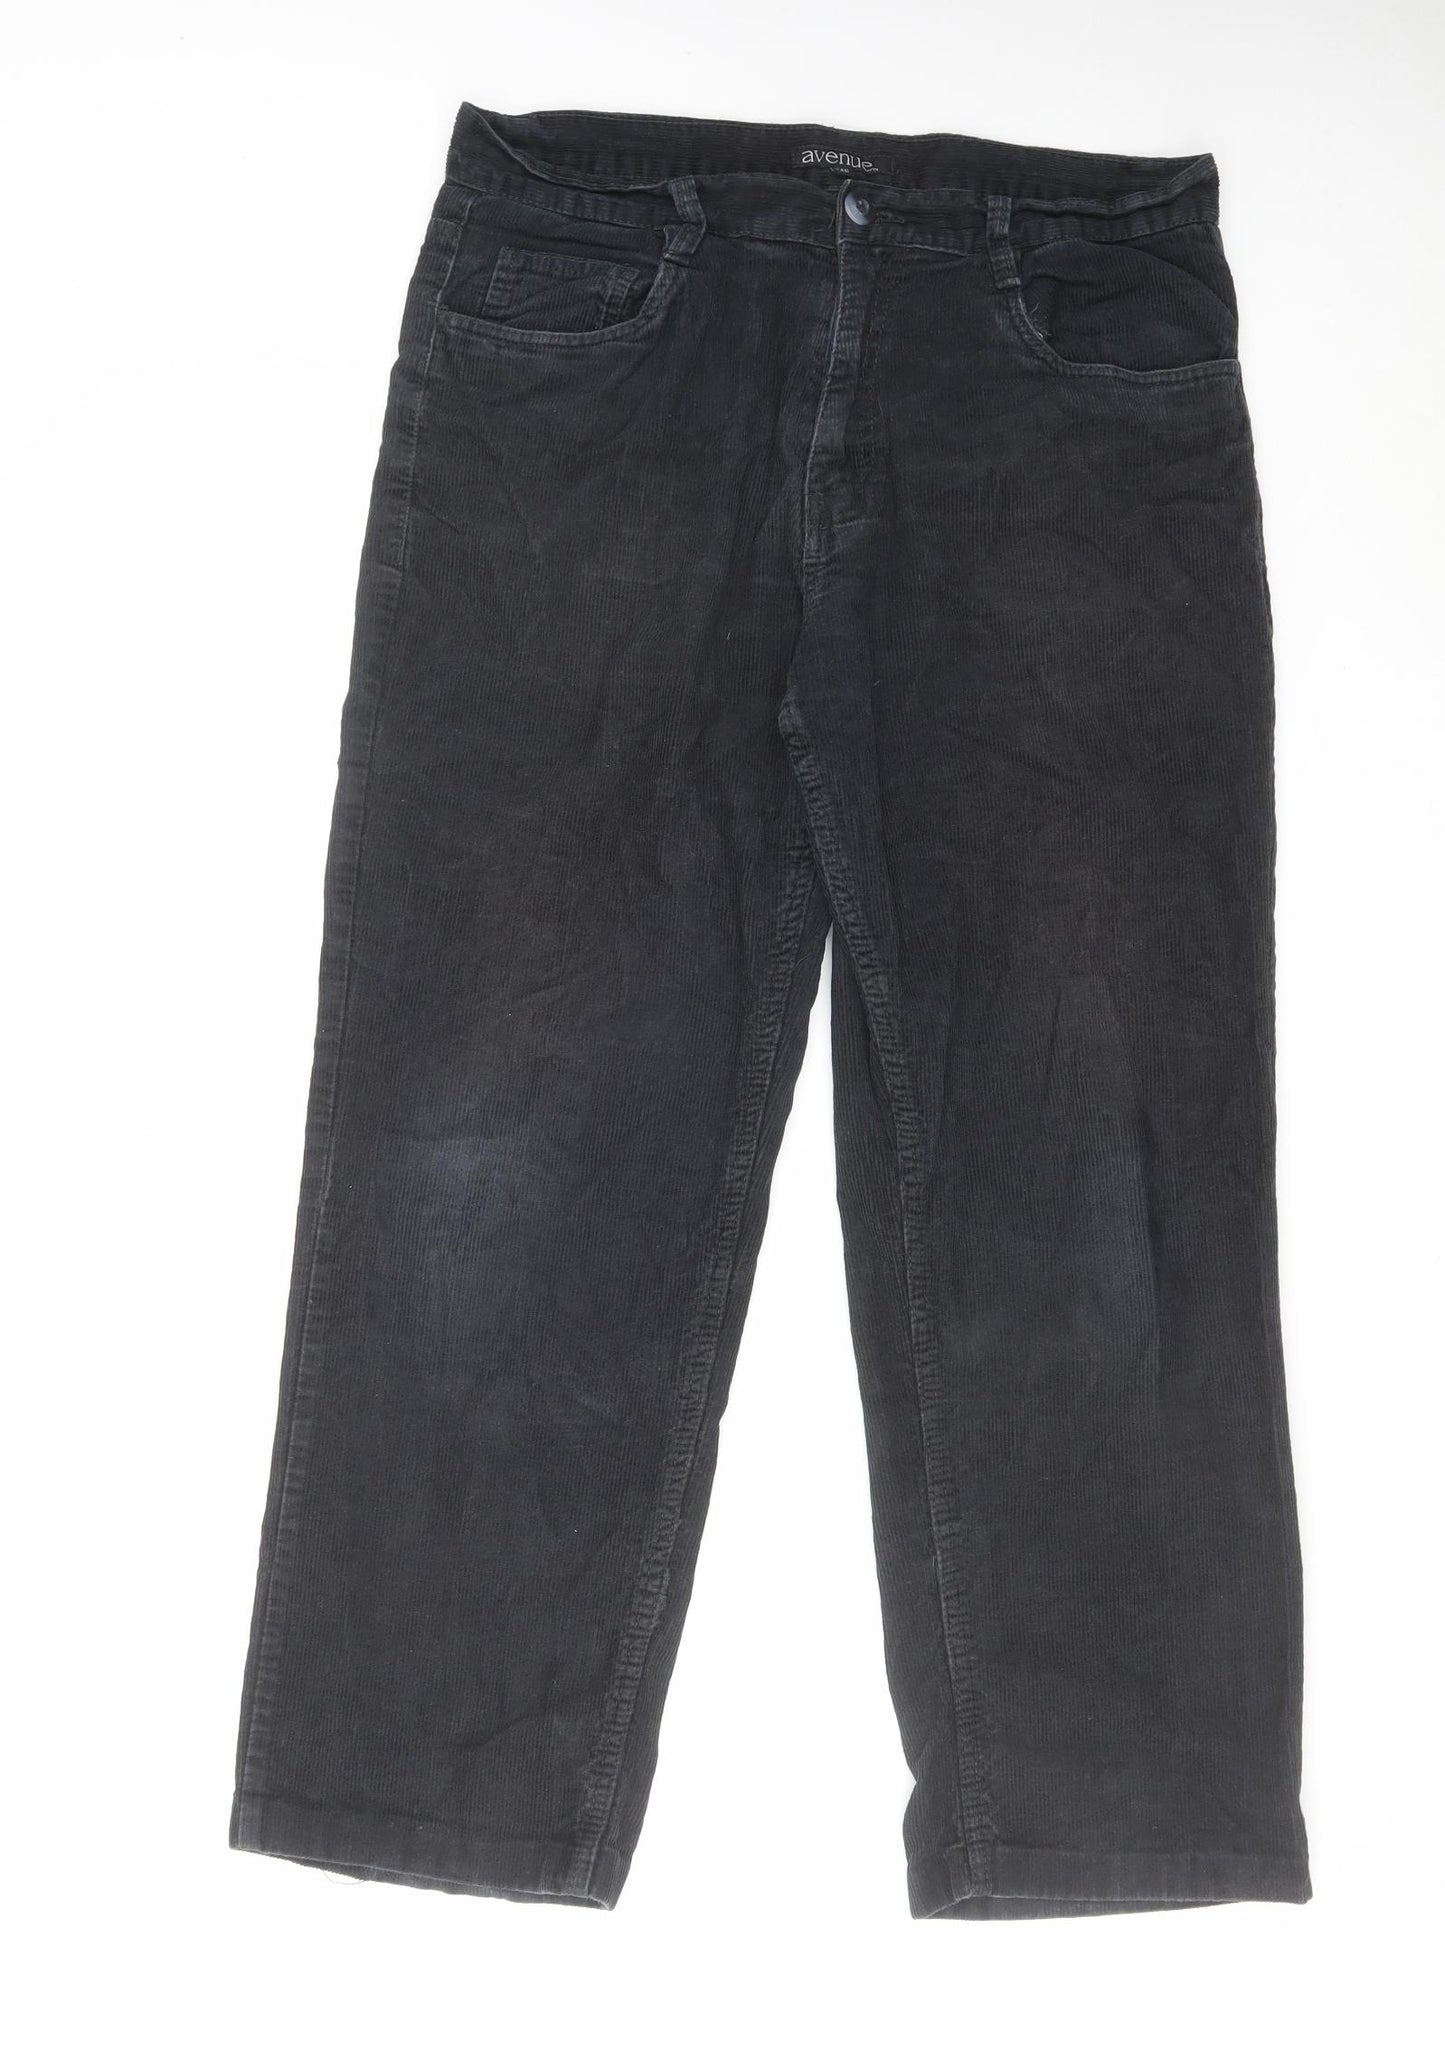 Avenue Mens Black Cotton Trousers Size 34 in L28 in Regular Zip